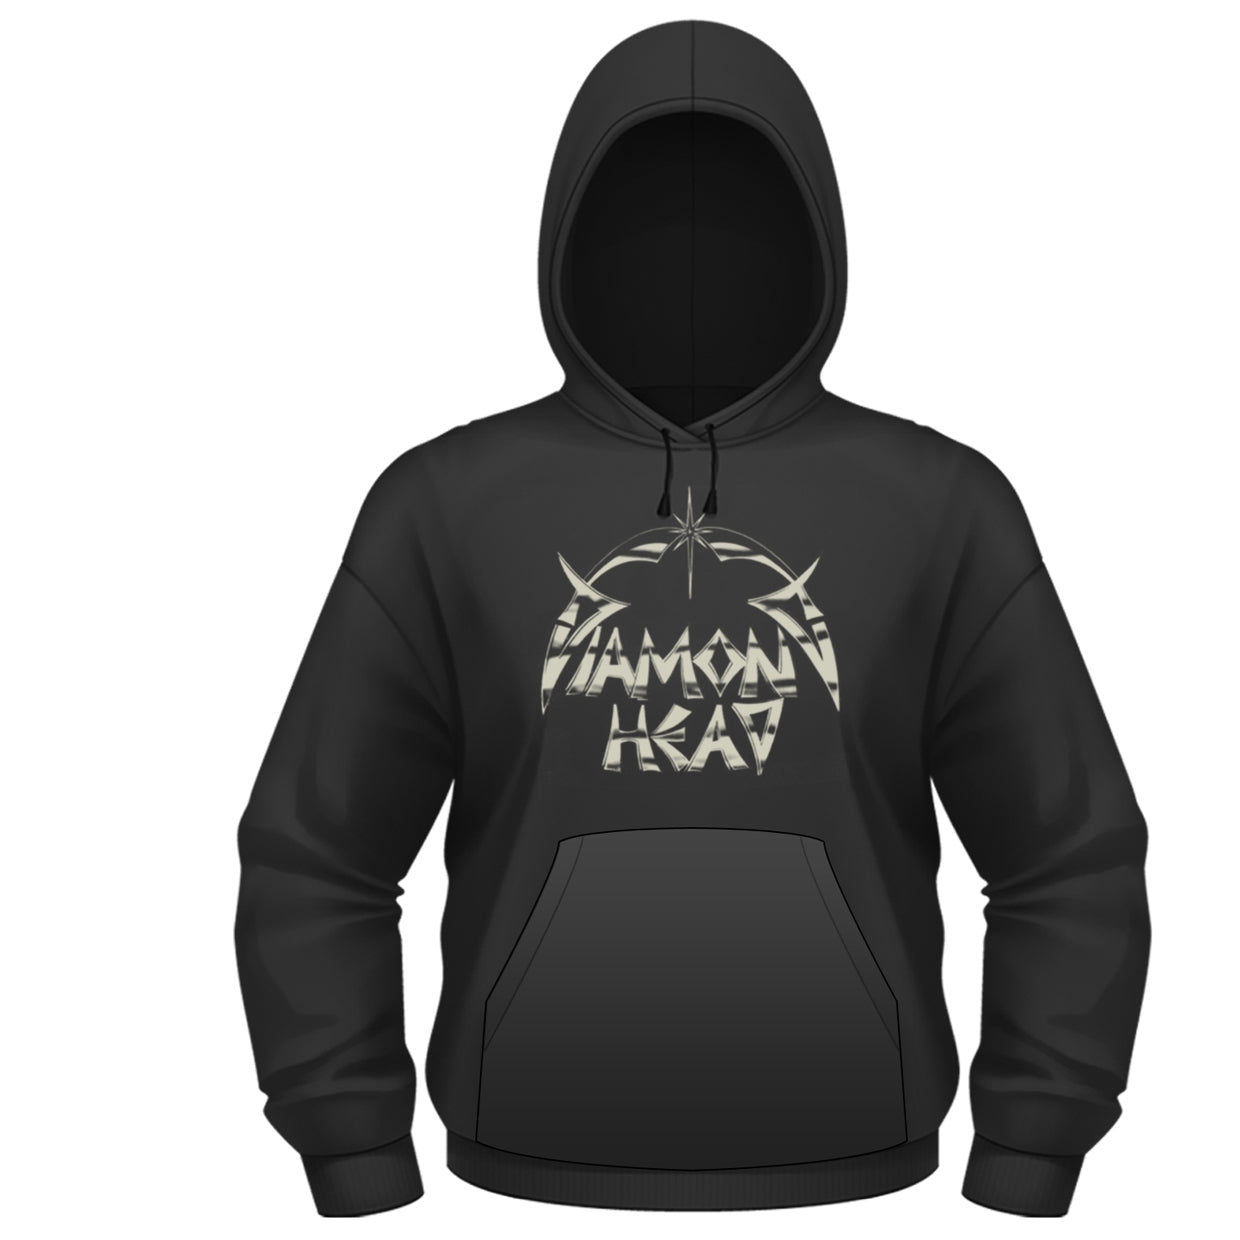 Diamond Head "Lightning To The Nations" Hooded Sweatshirt